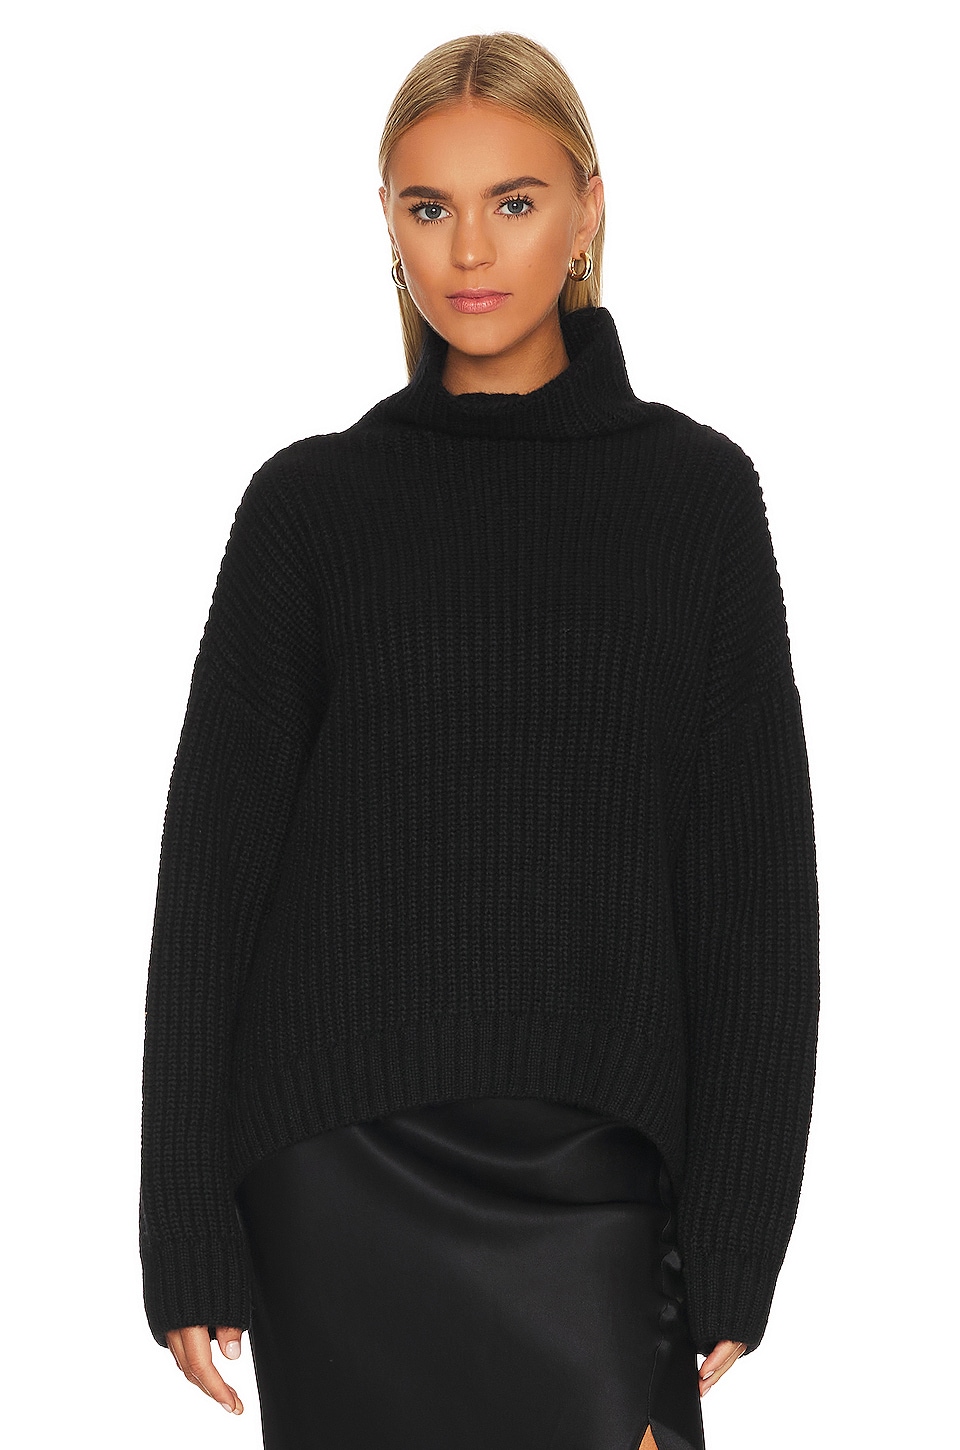 ANINE BING Sydney Sweater in Black | REVOLVE